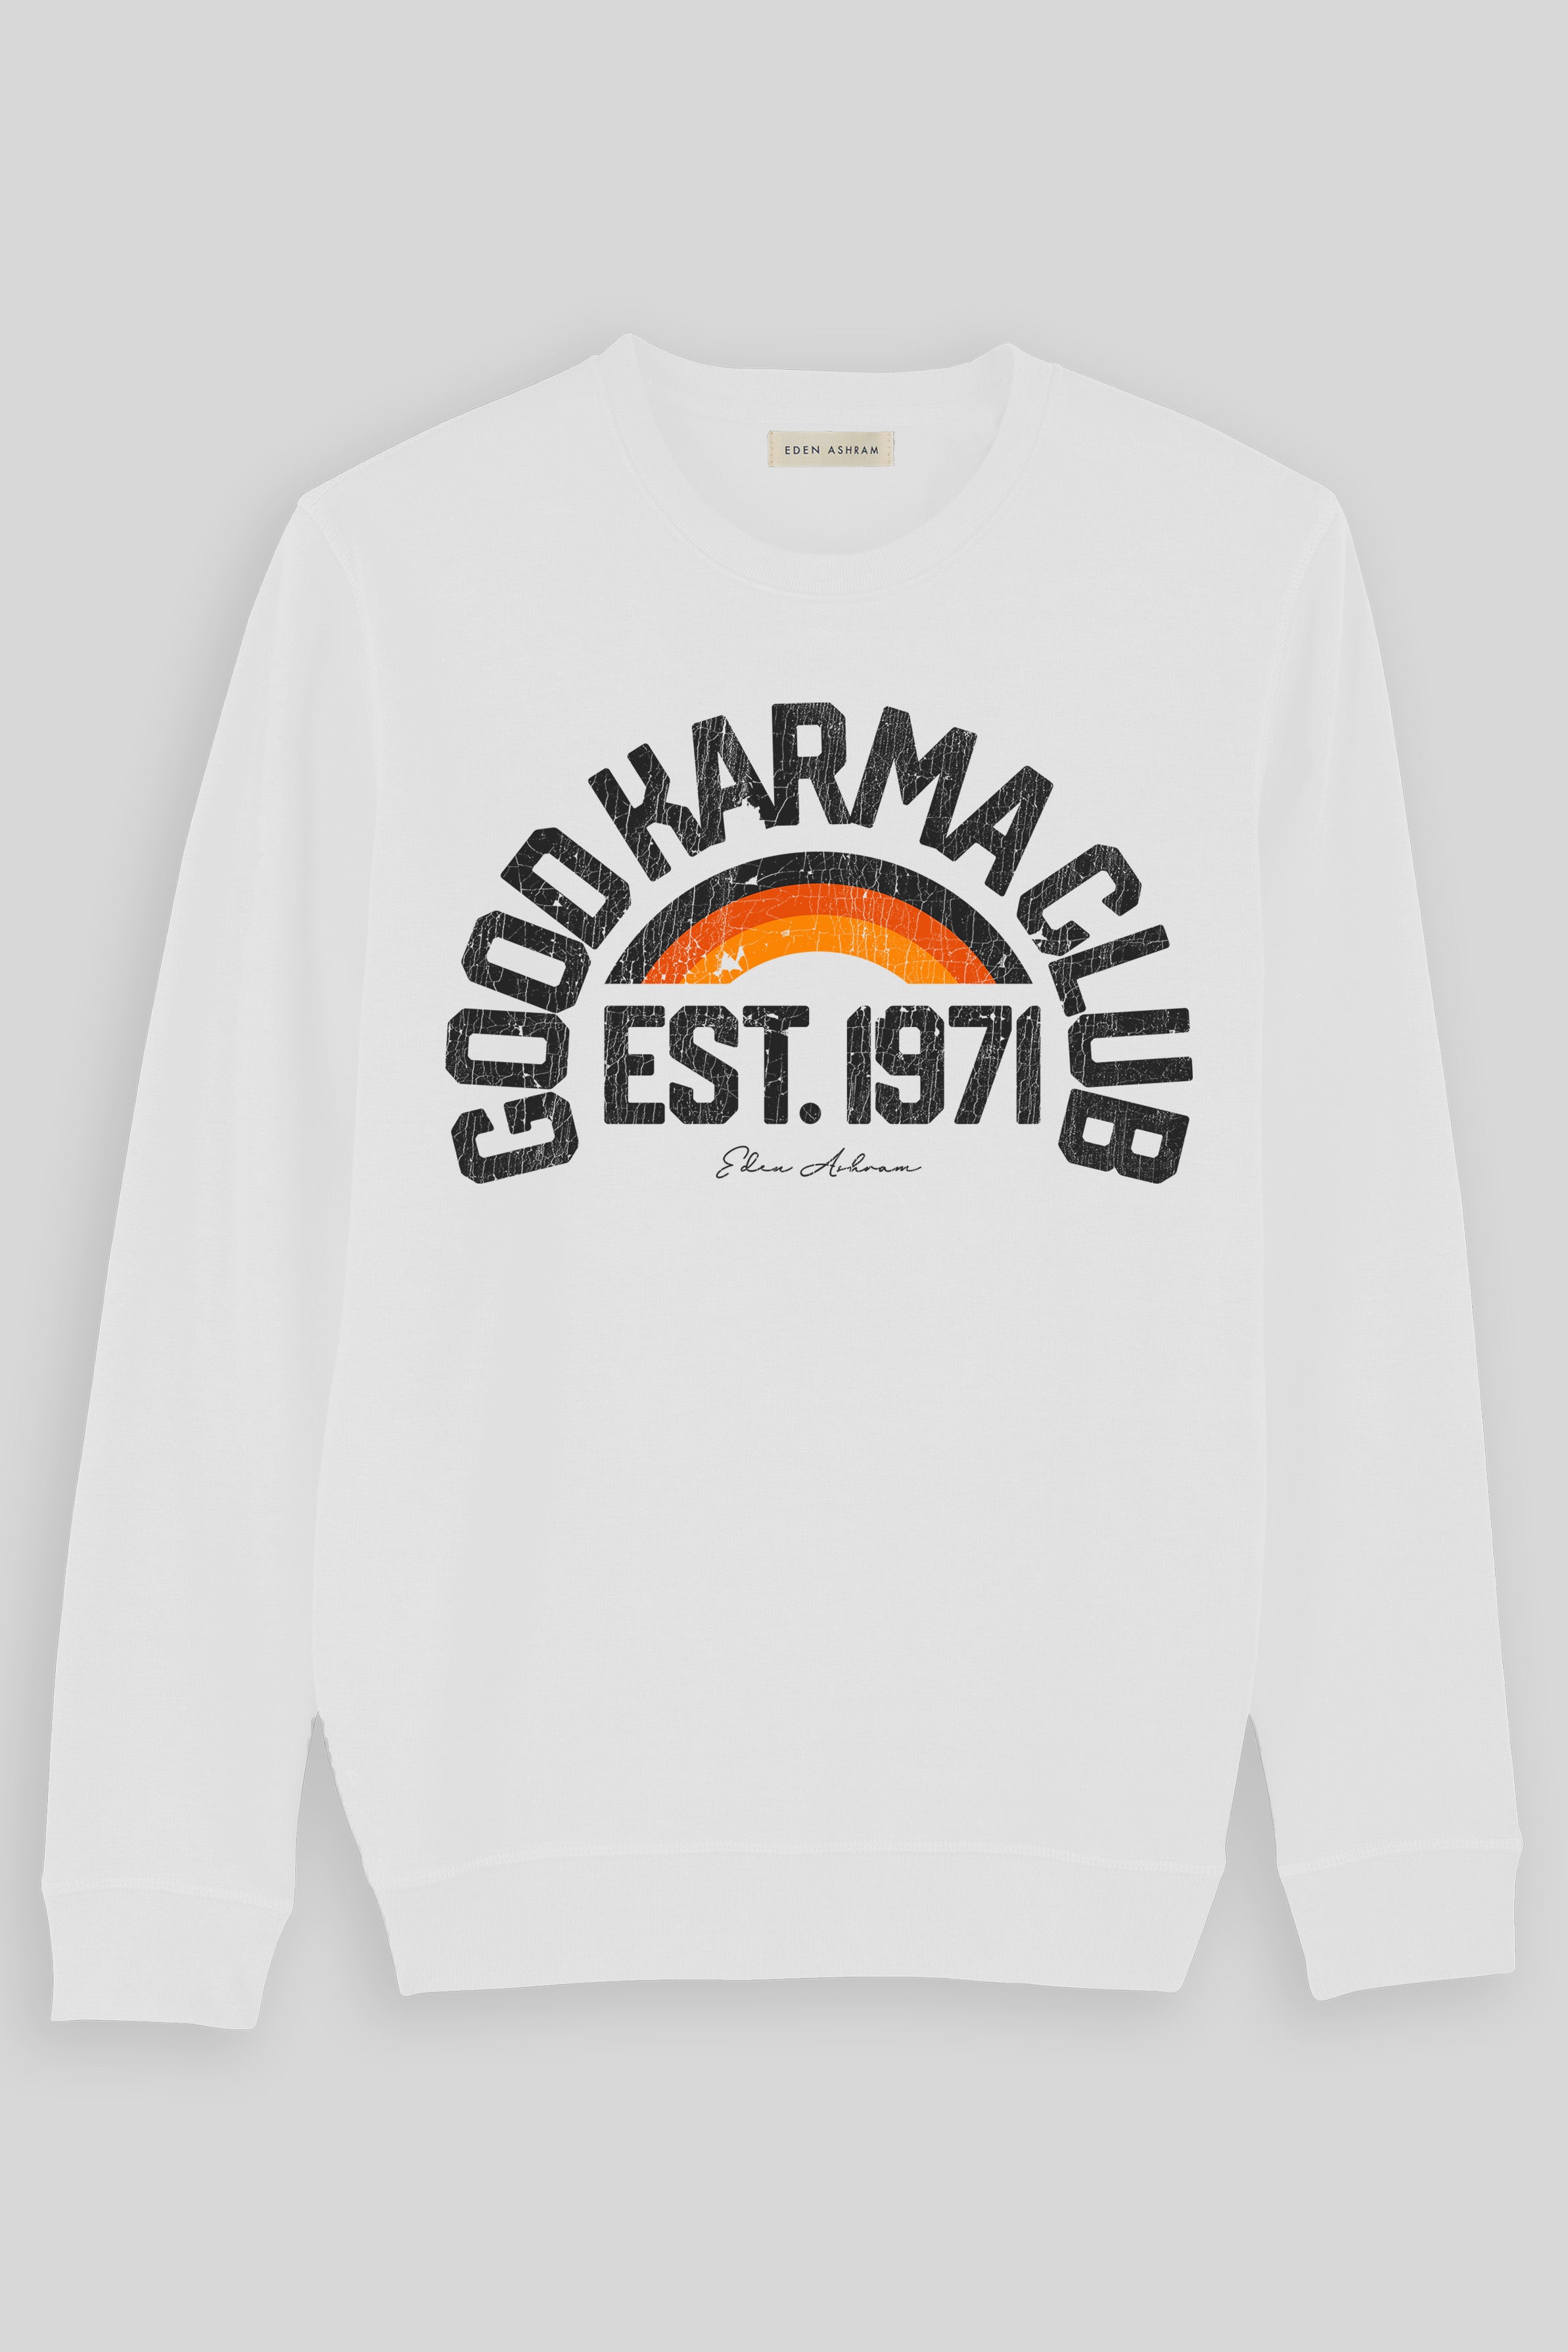 EDEN ASHRAM Good Karma Club Premium Crew Neck Sweatshirt White